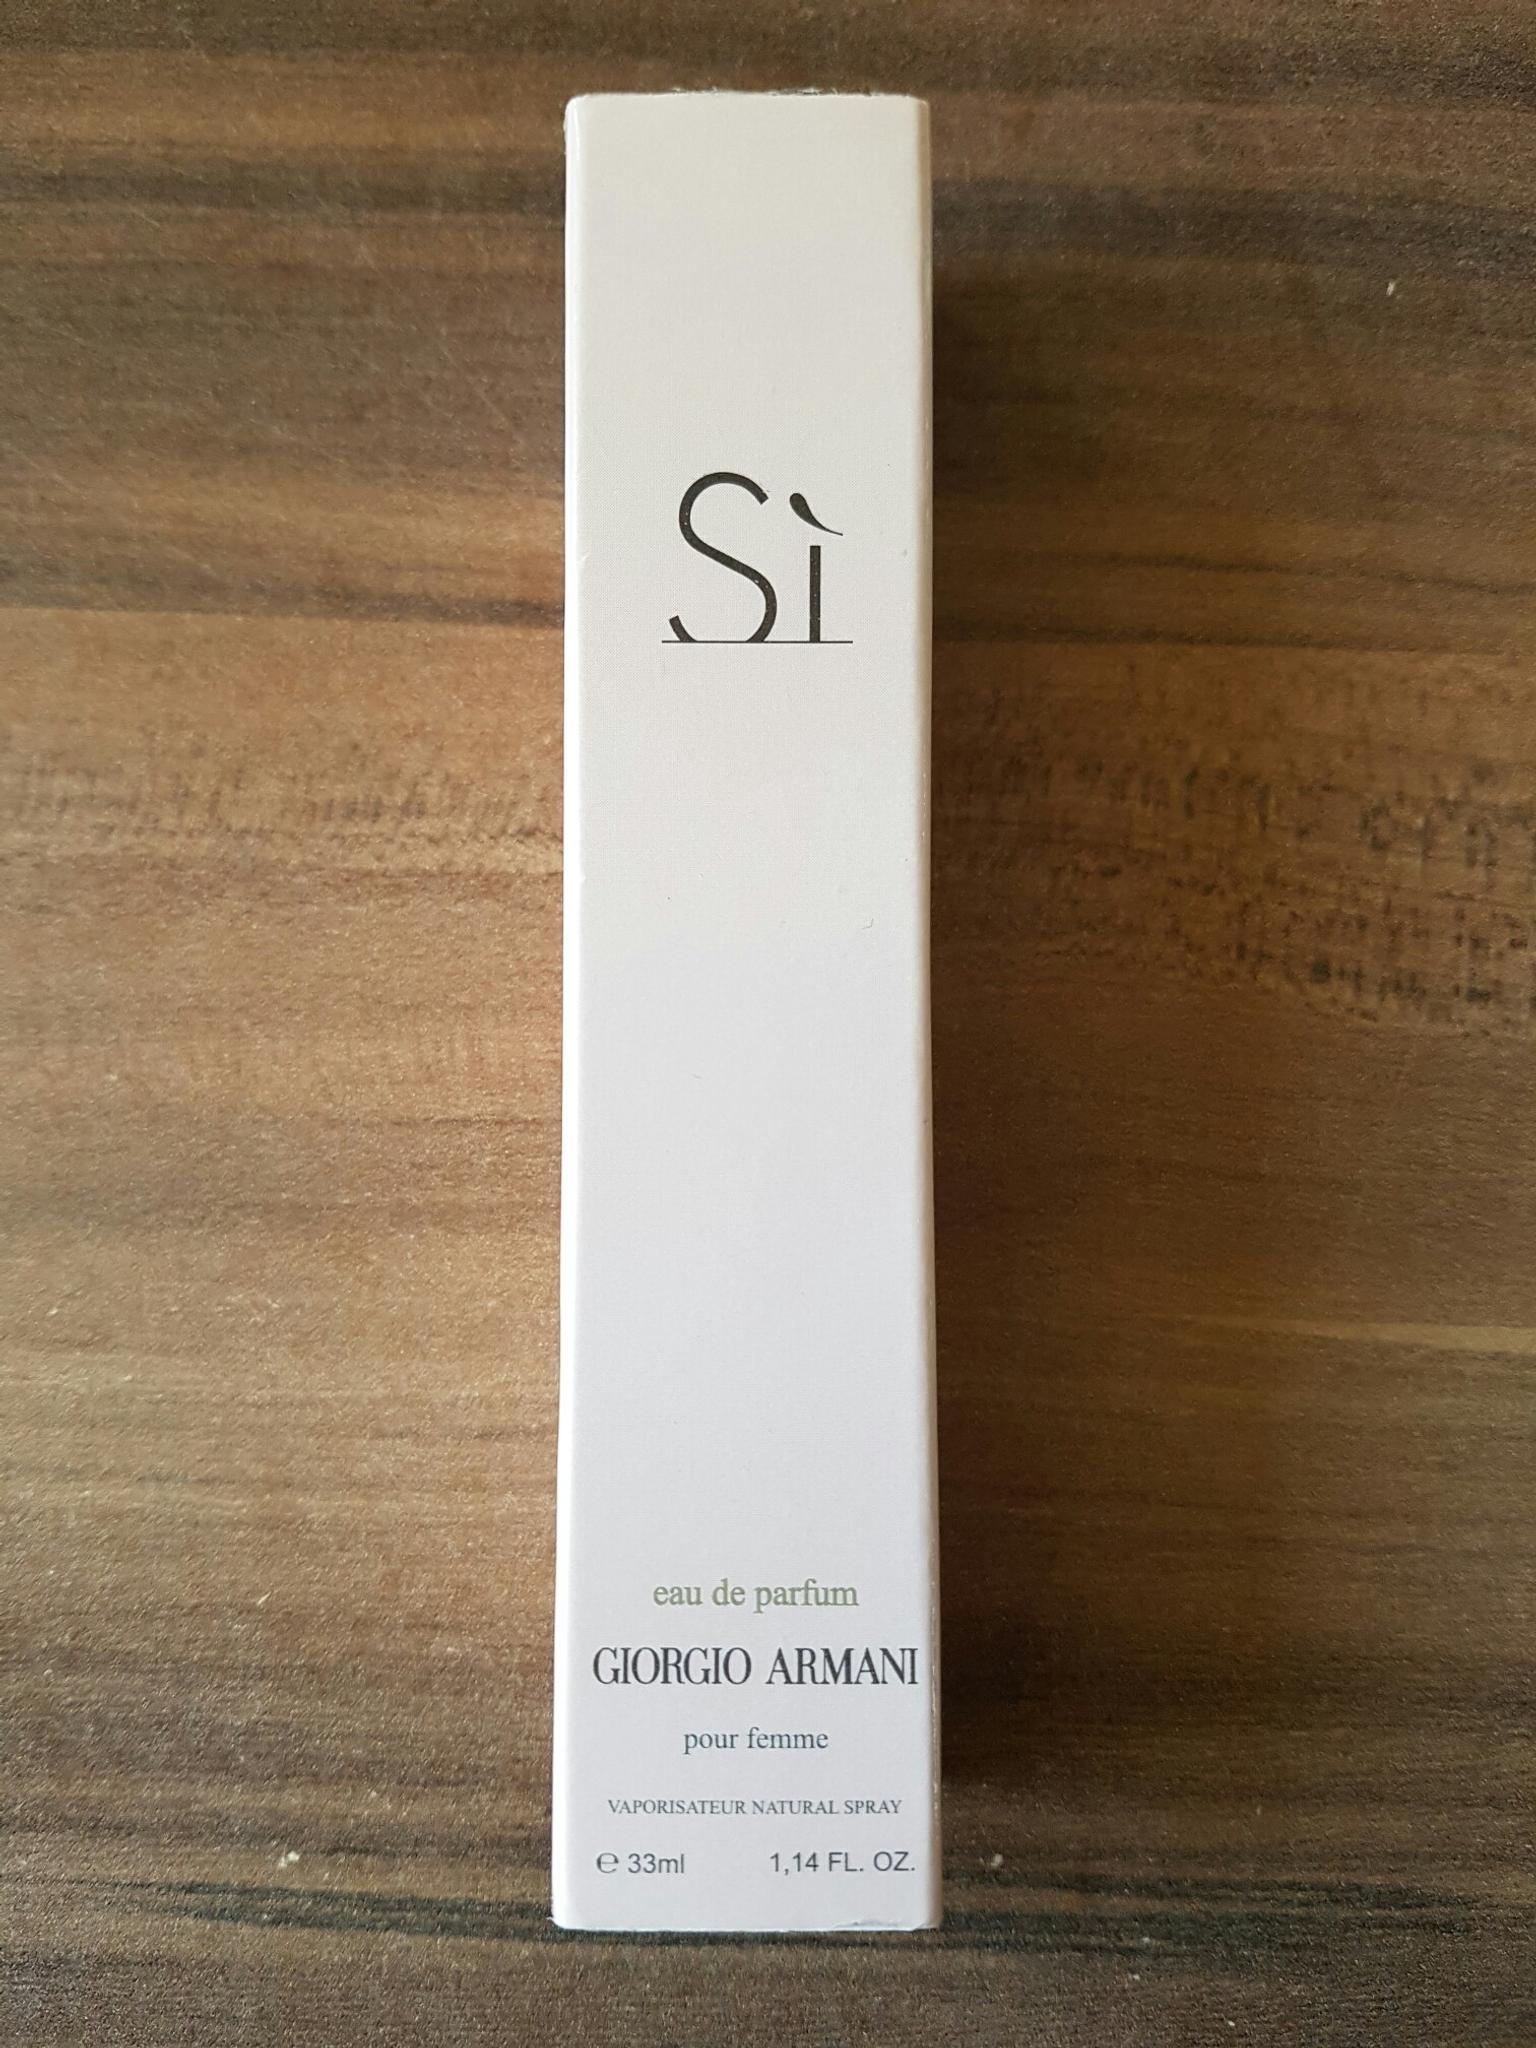 giorgio armani si eau de parfum 33ml